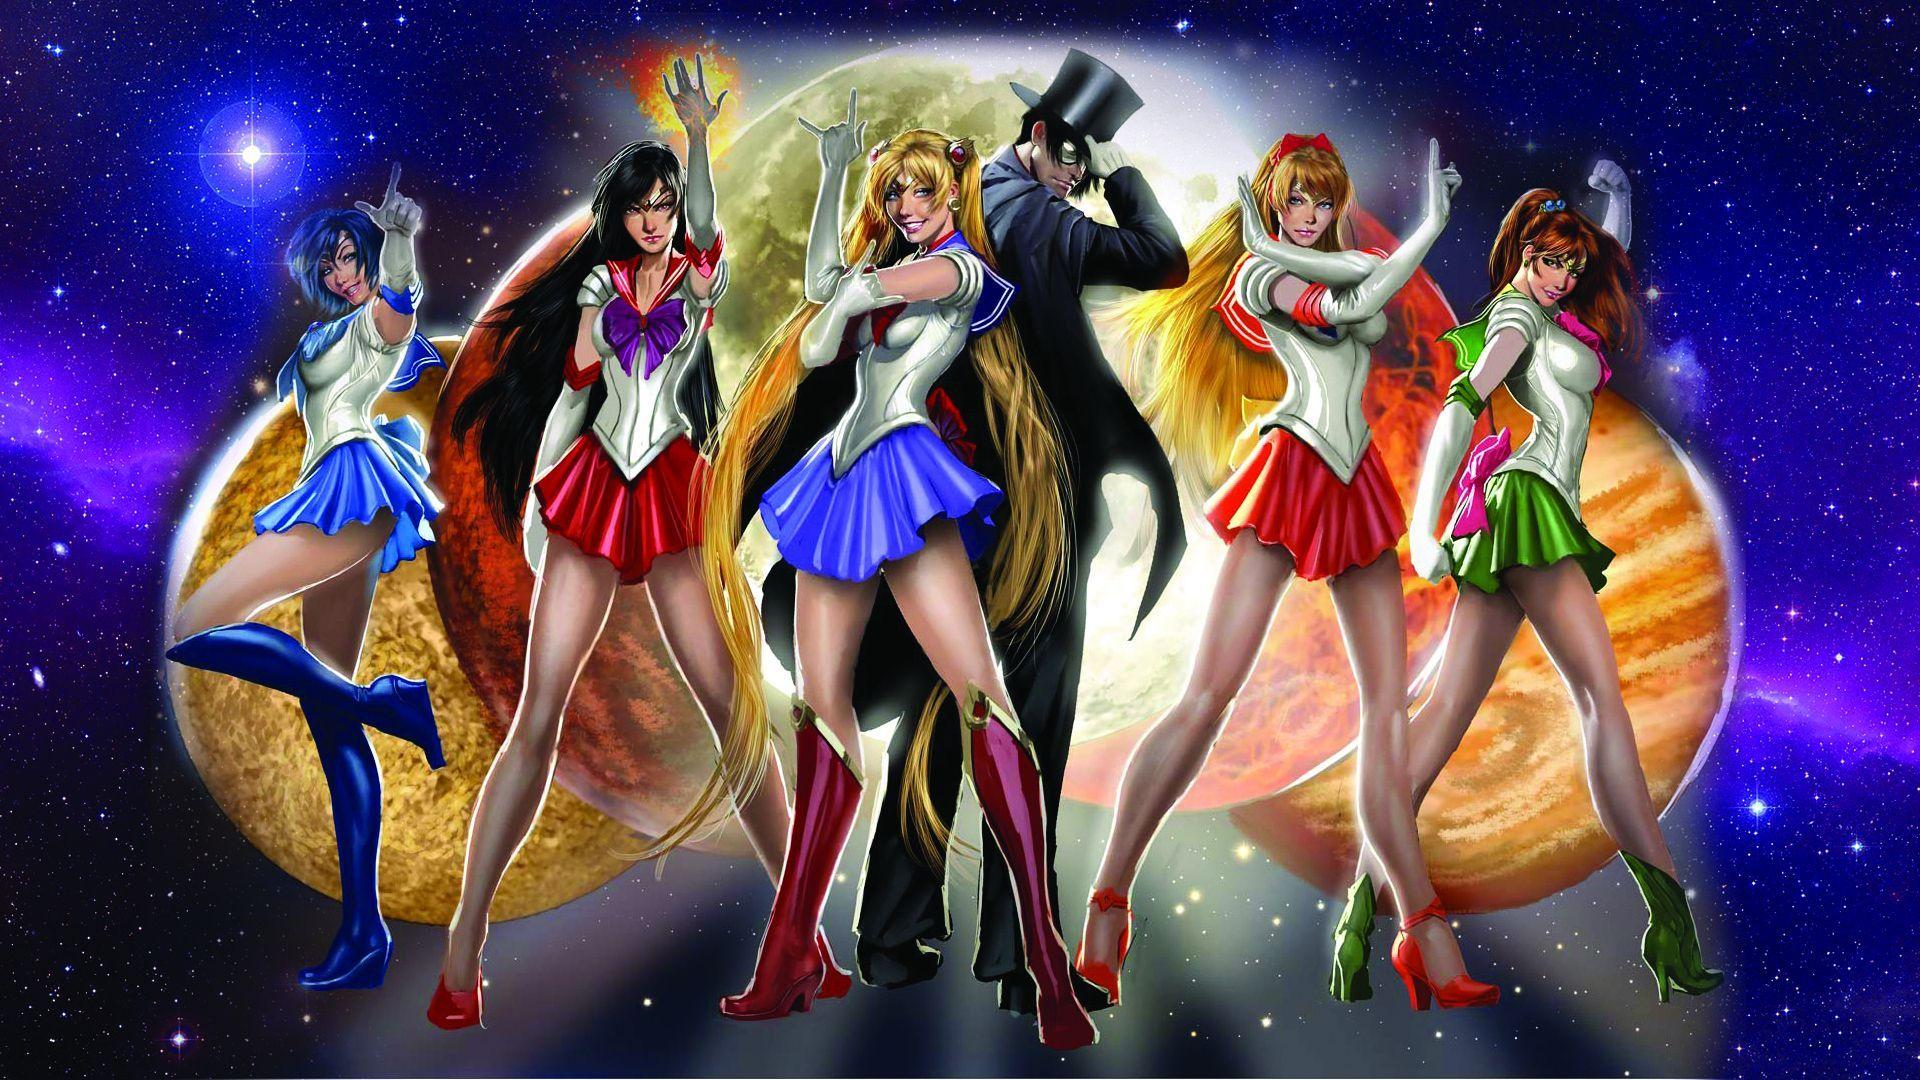 Sailor Moon HD Wallpaper, High Definition, High Quality